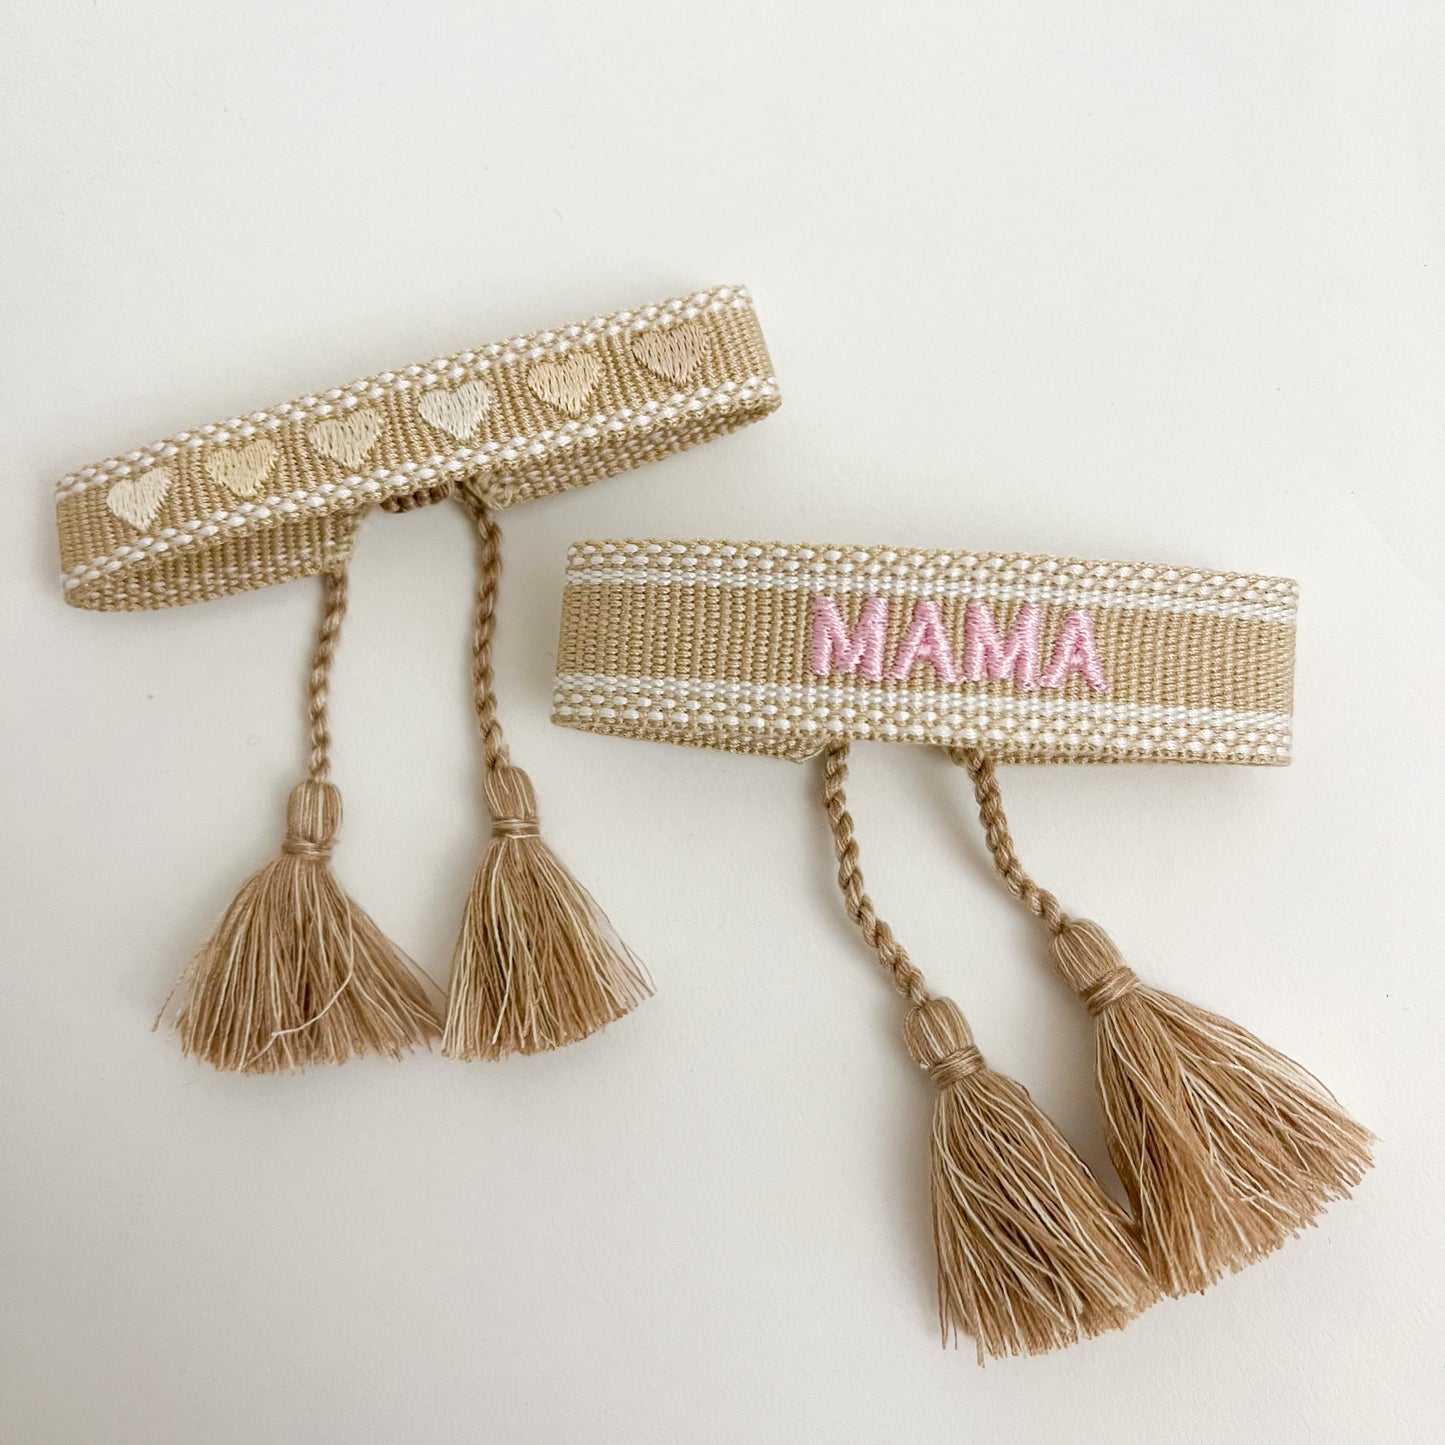 Mama Embroidered Bracelet